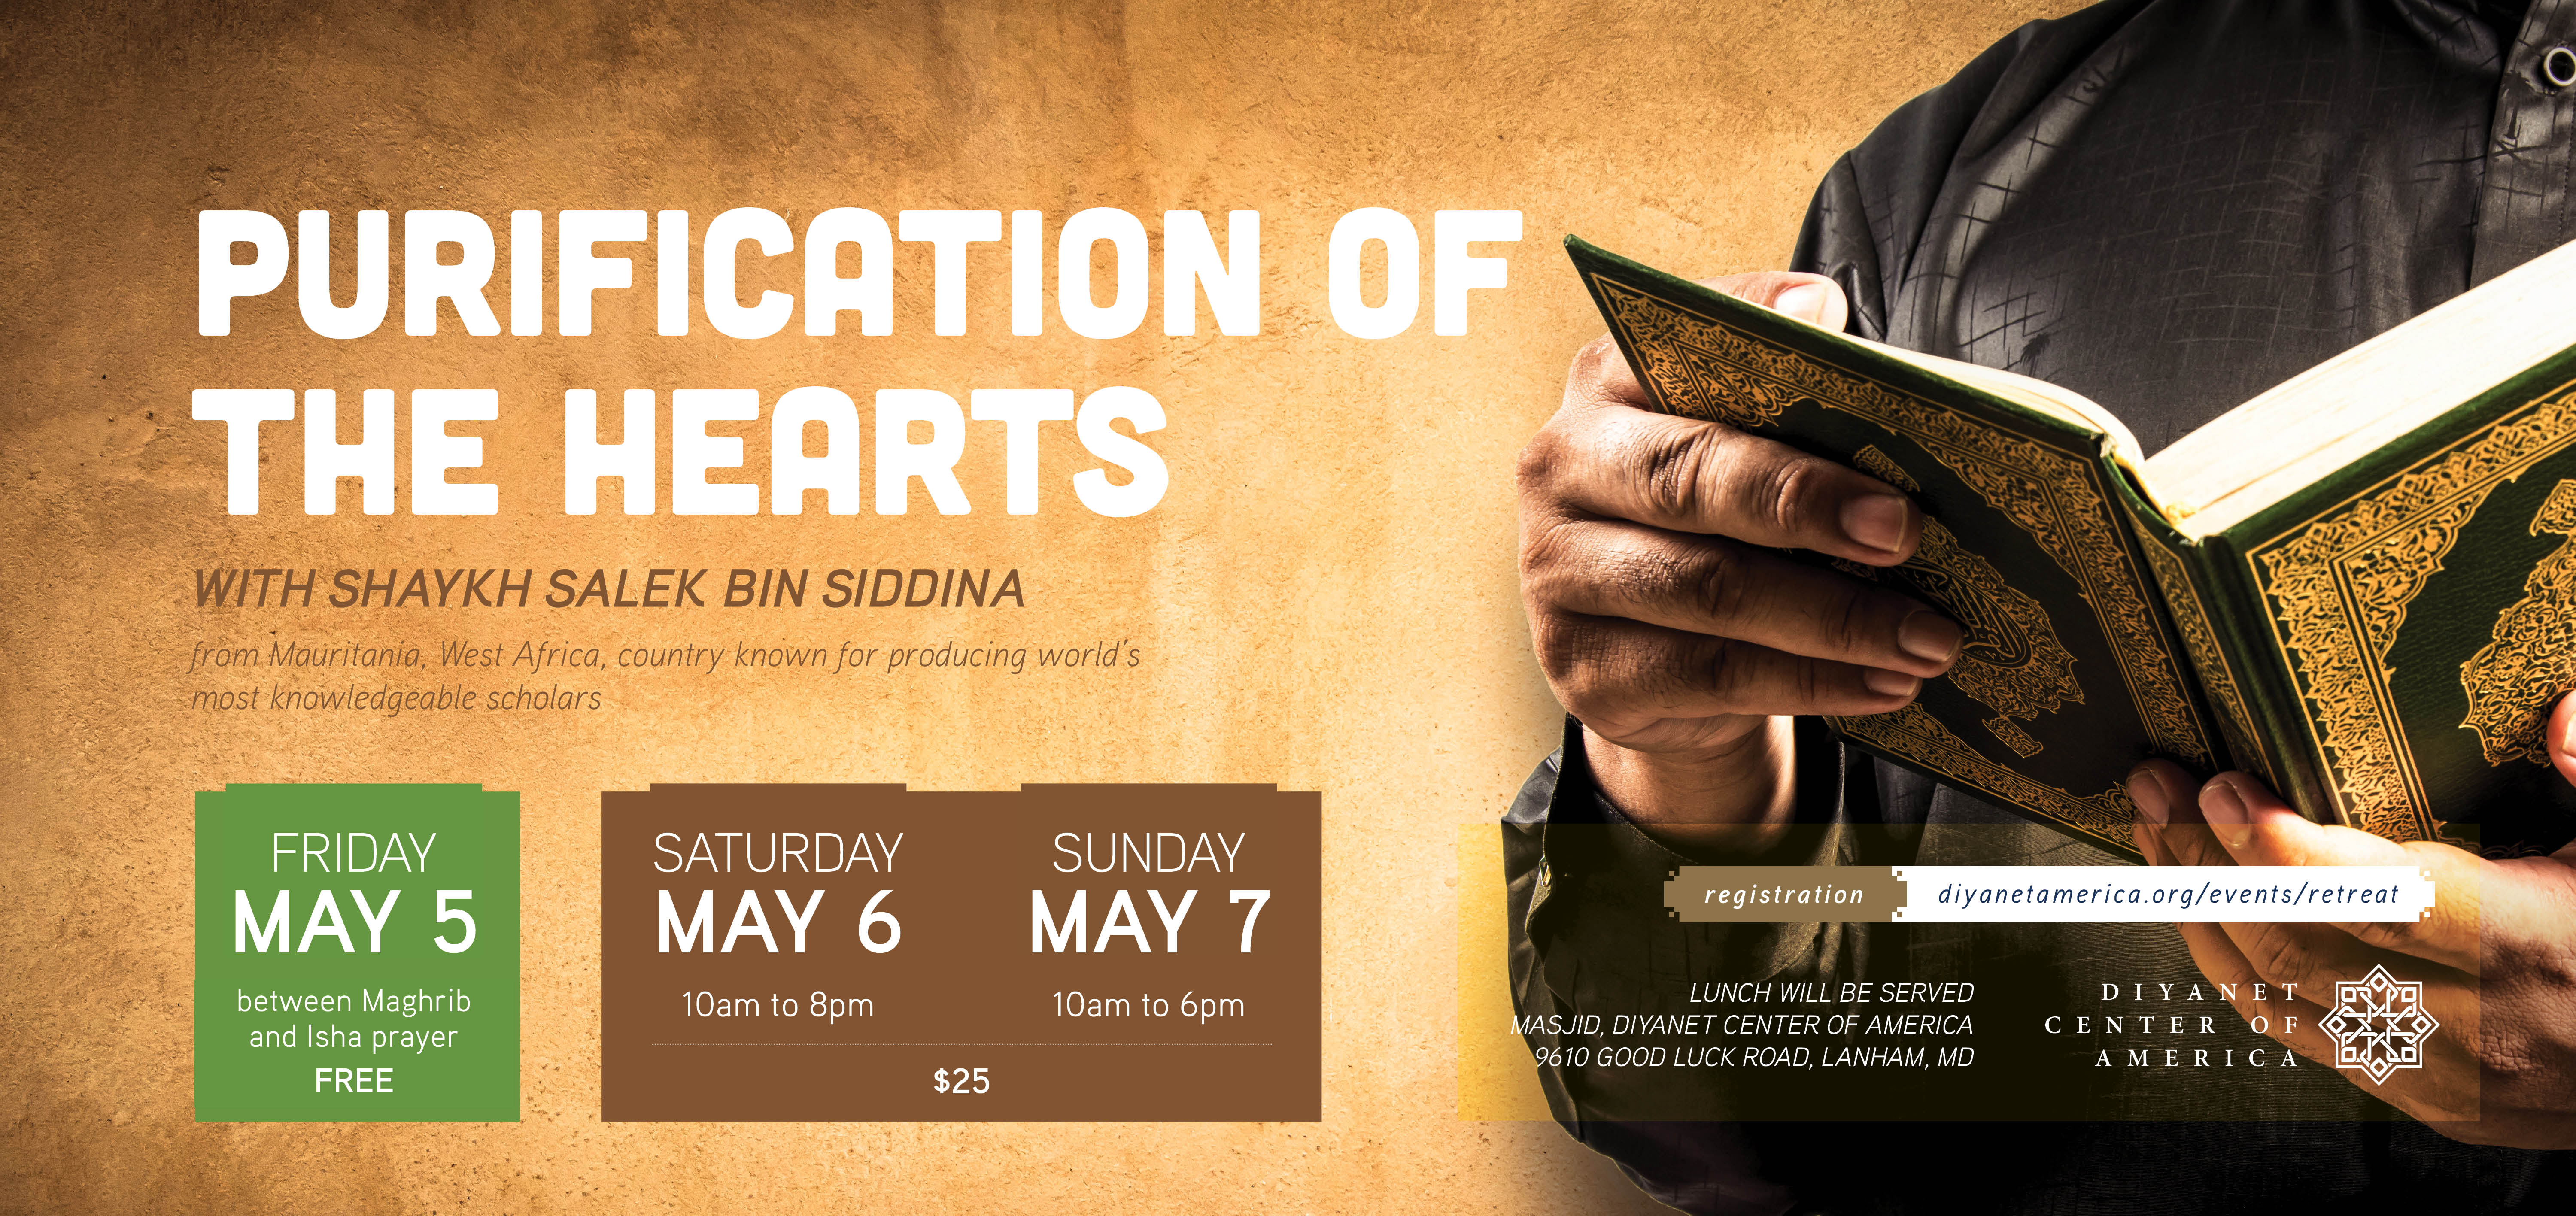 Purification of the Hearts with Shaykh Salek bin Siddina